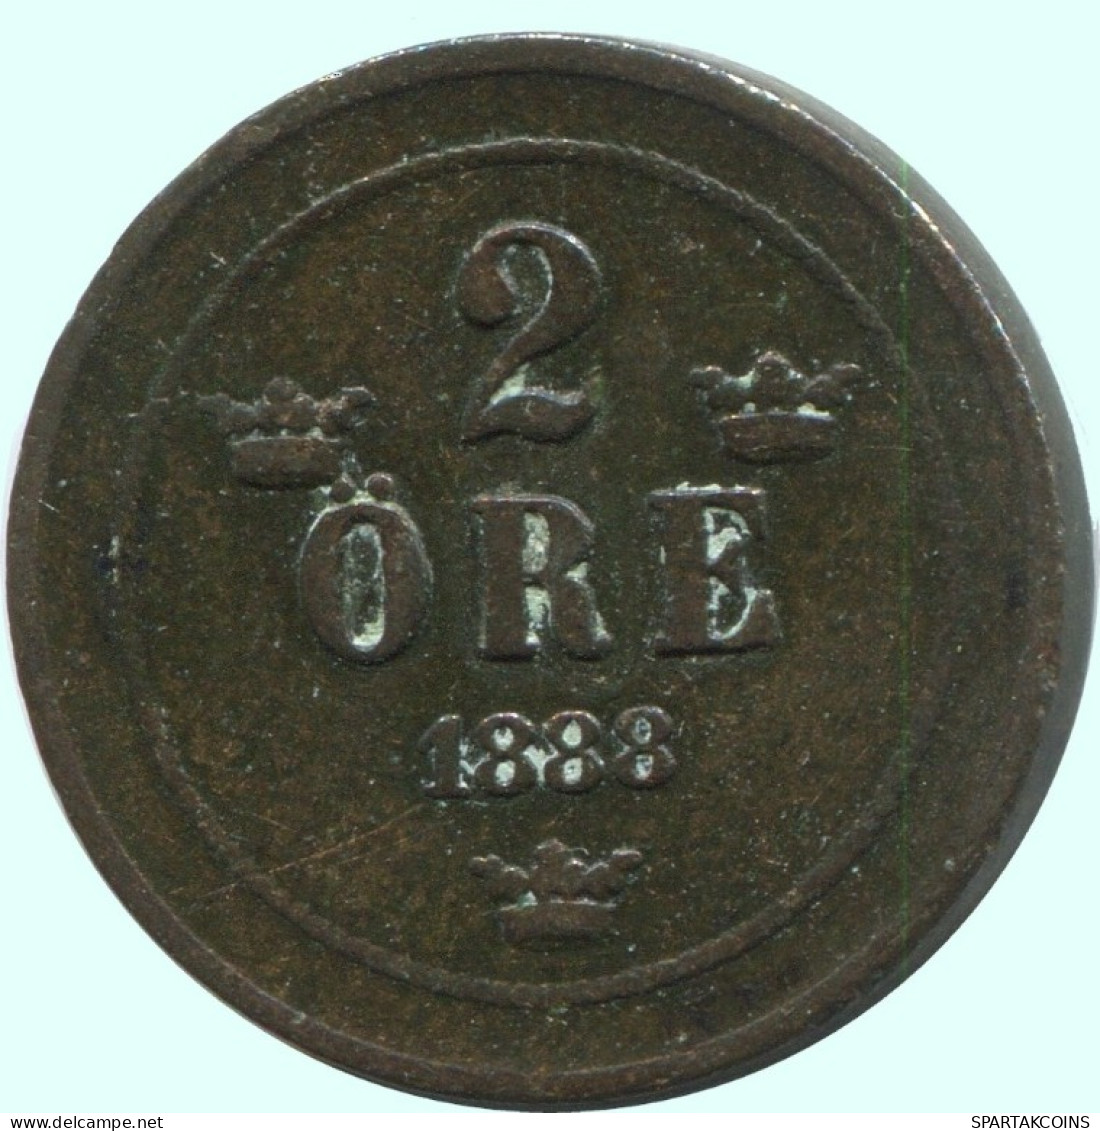 2 ORE 1888 SUECIA SWEDEN Moneda #AC893.2.E.A - Suède